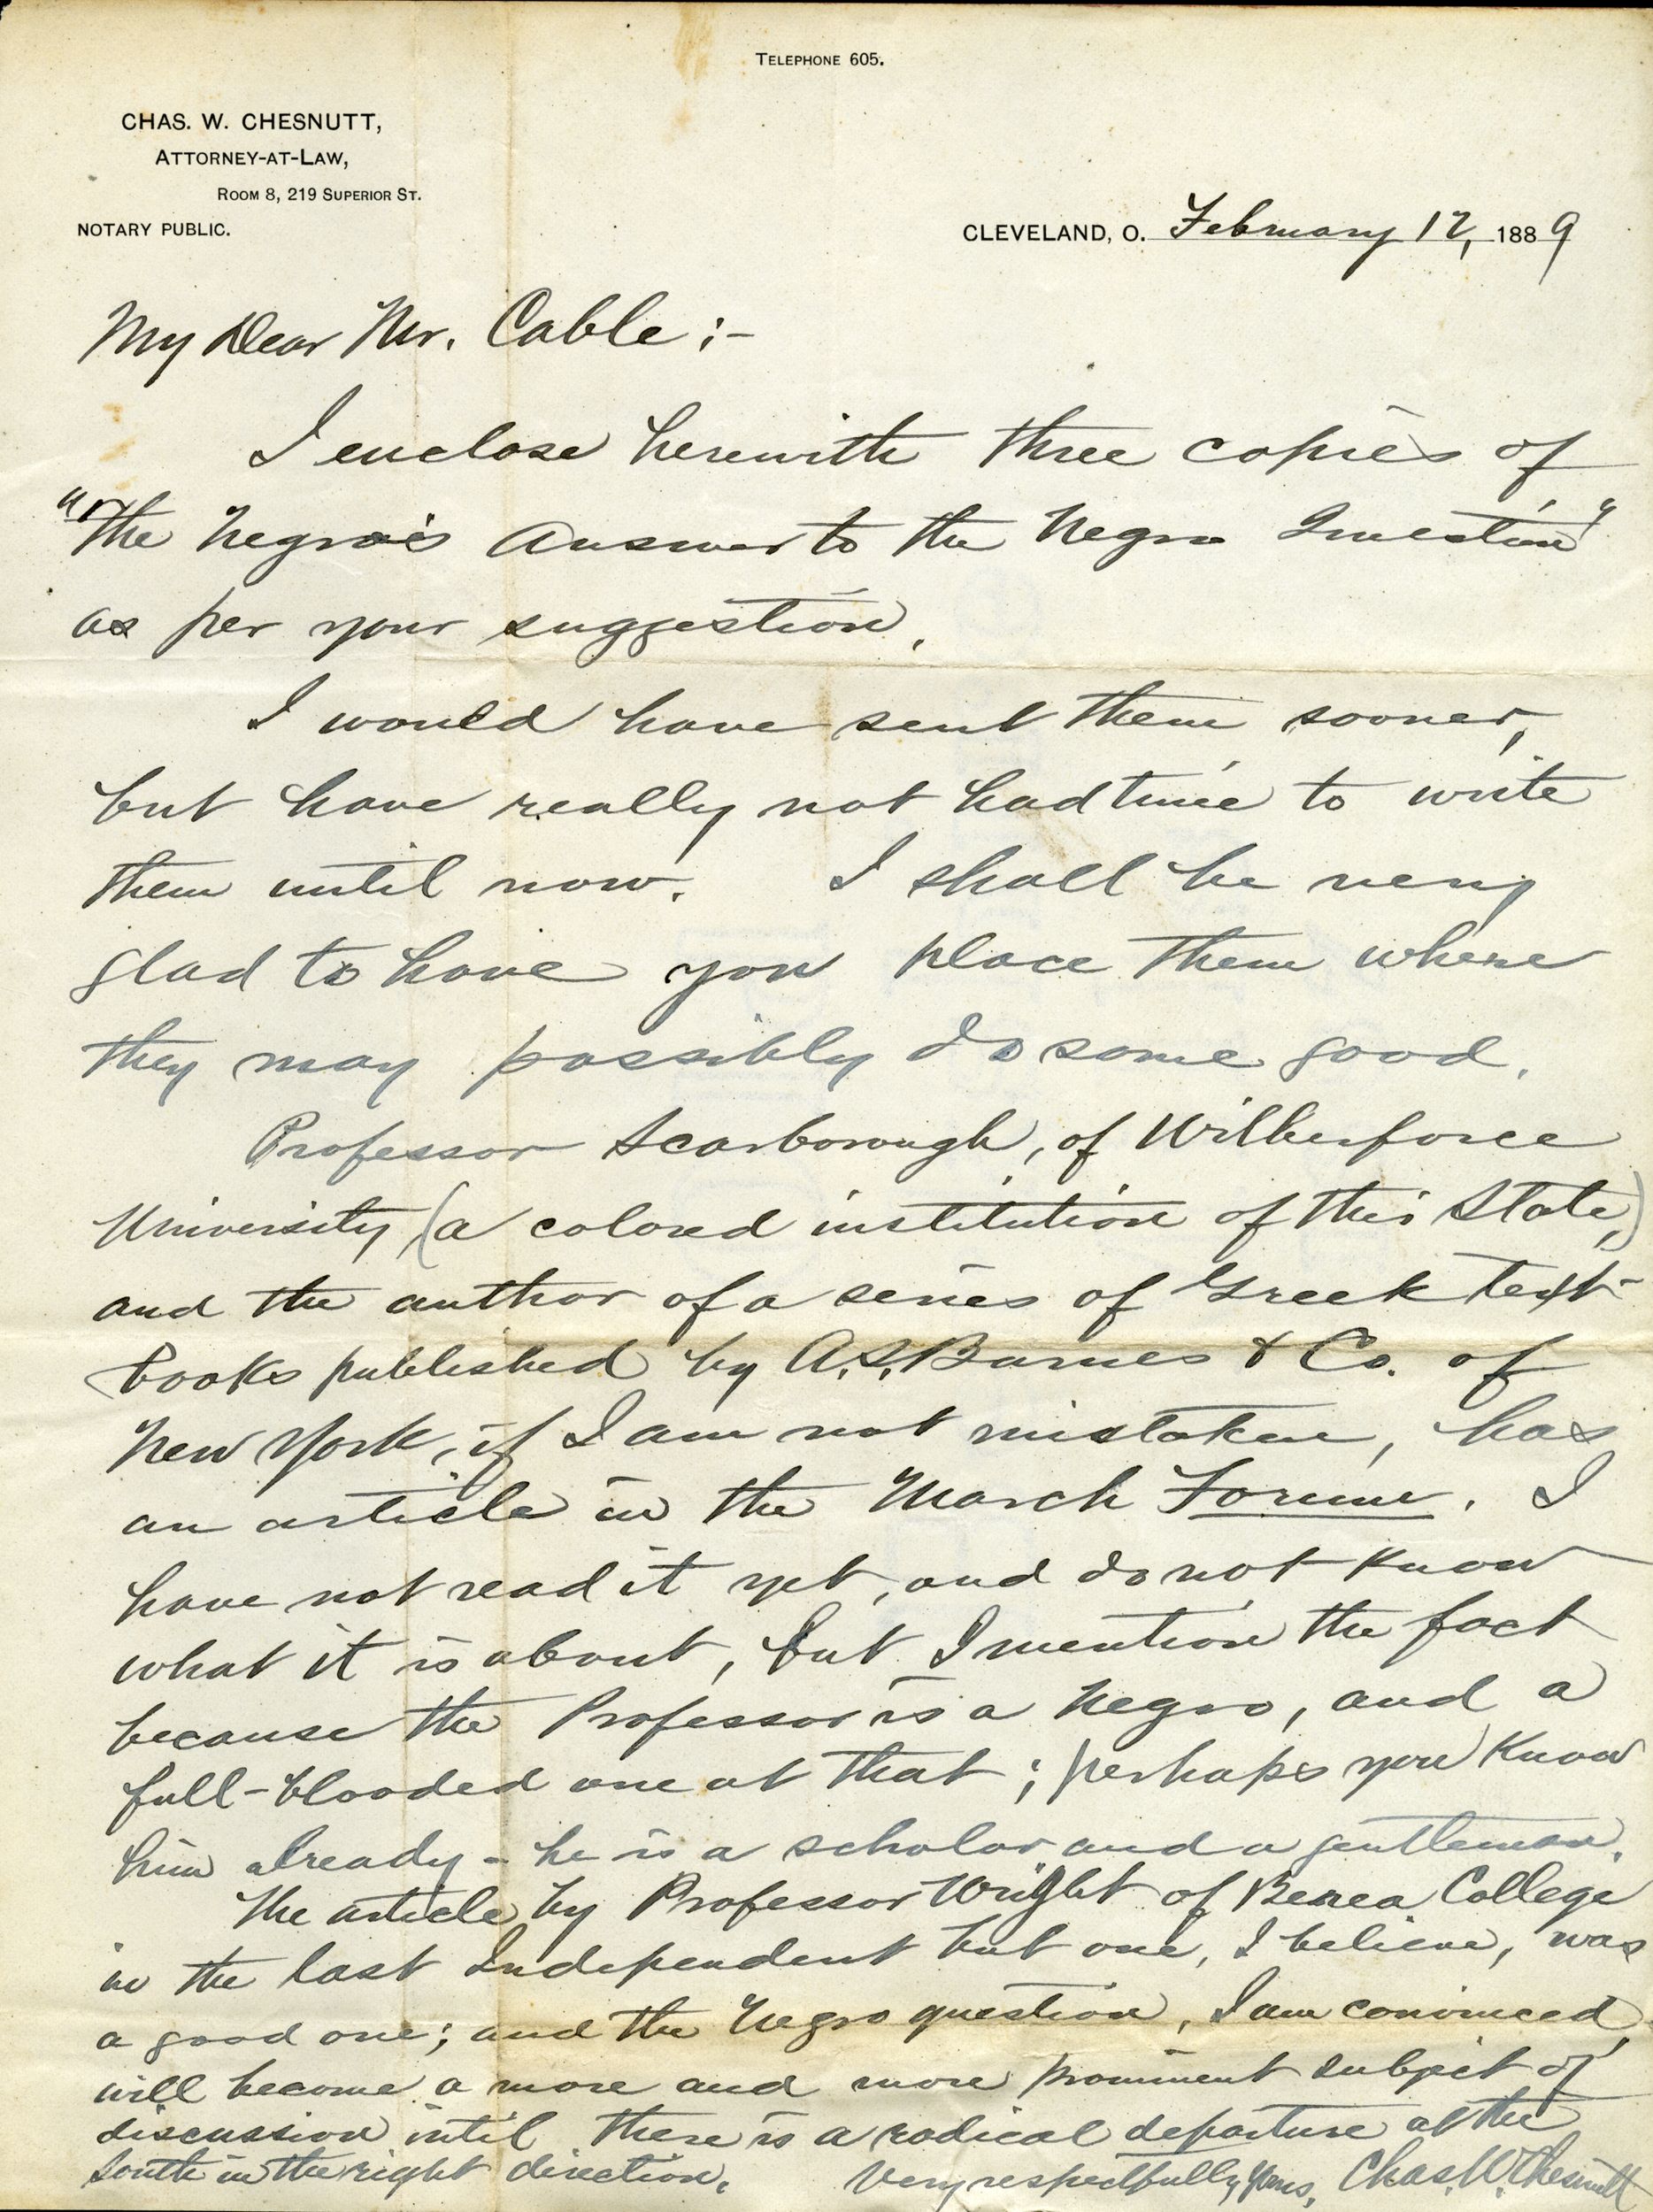 Correspondence between Chesnutt and Washington. 